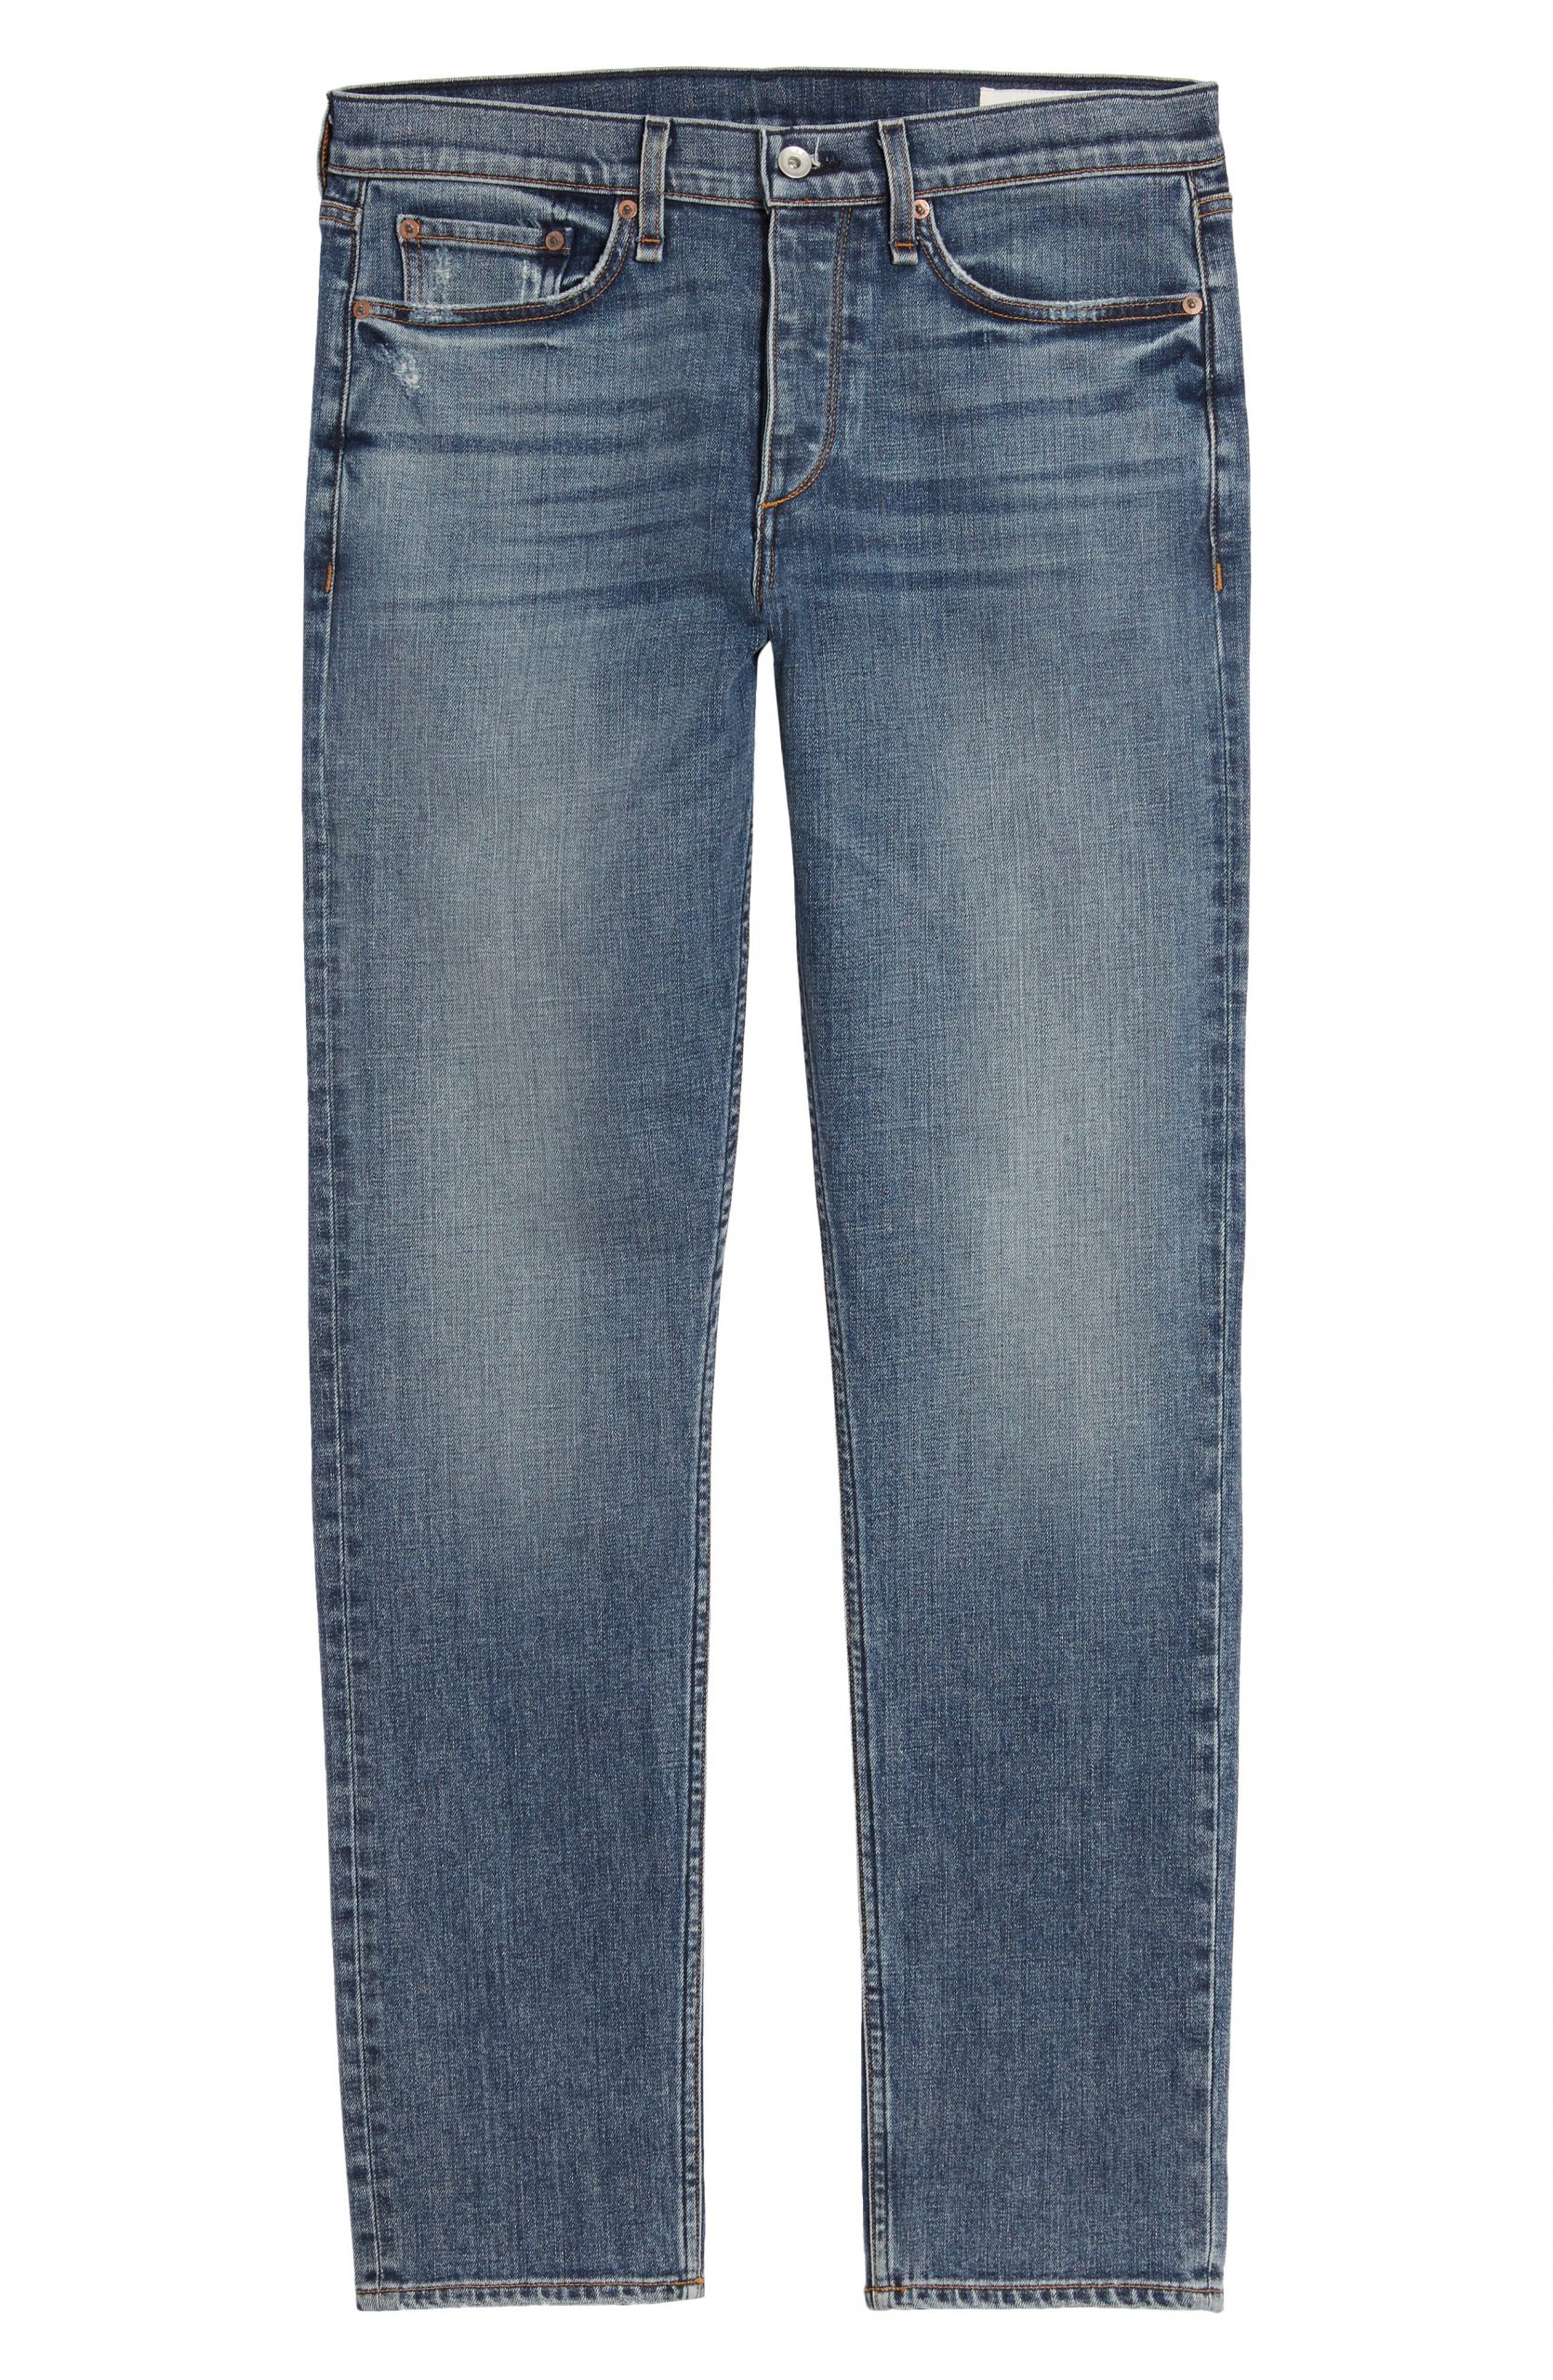 Men’s Rag & Bone Fit 2 Slim Fit Jeans, Size 30R - Blue | The Fashionisto